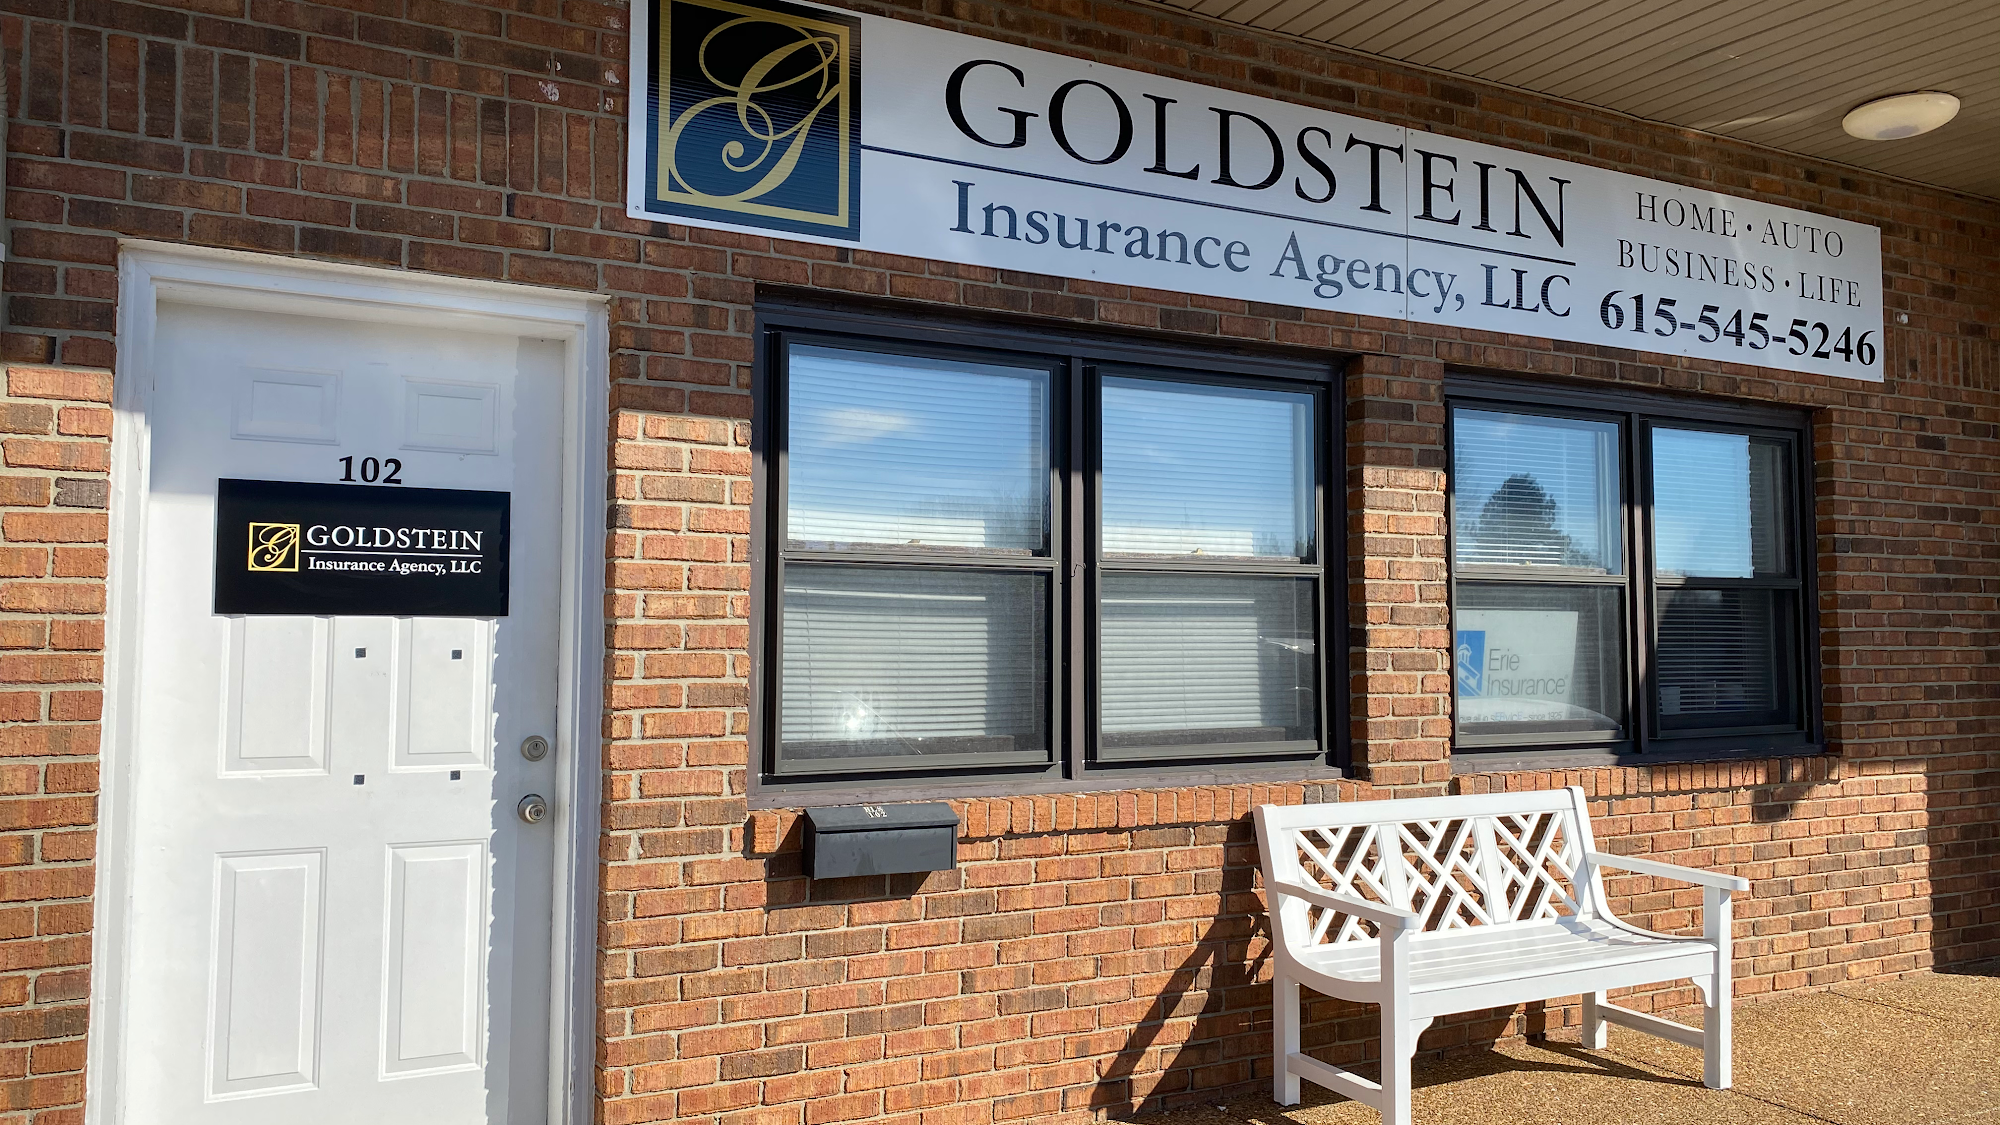 Goldstein Insurance Agency LLC